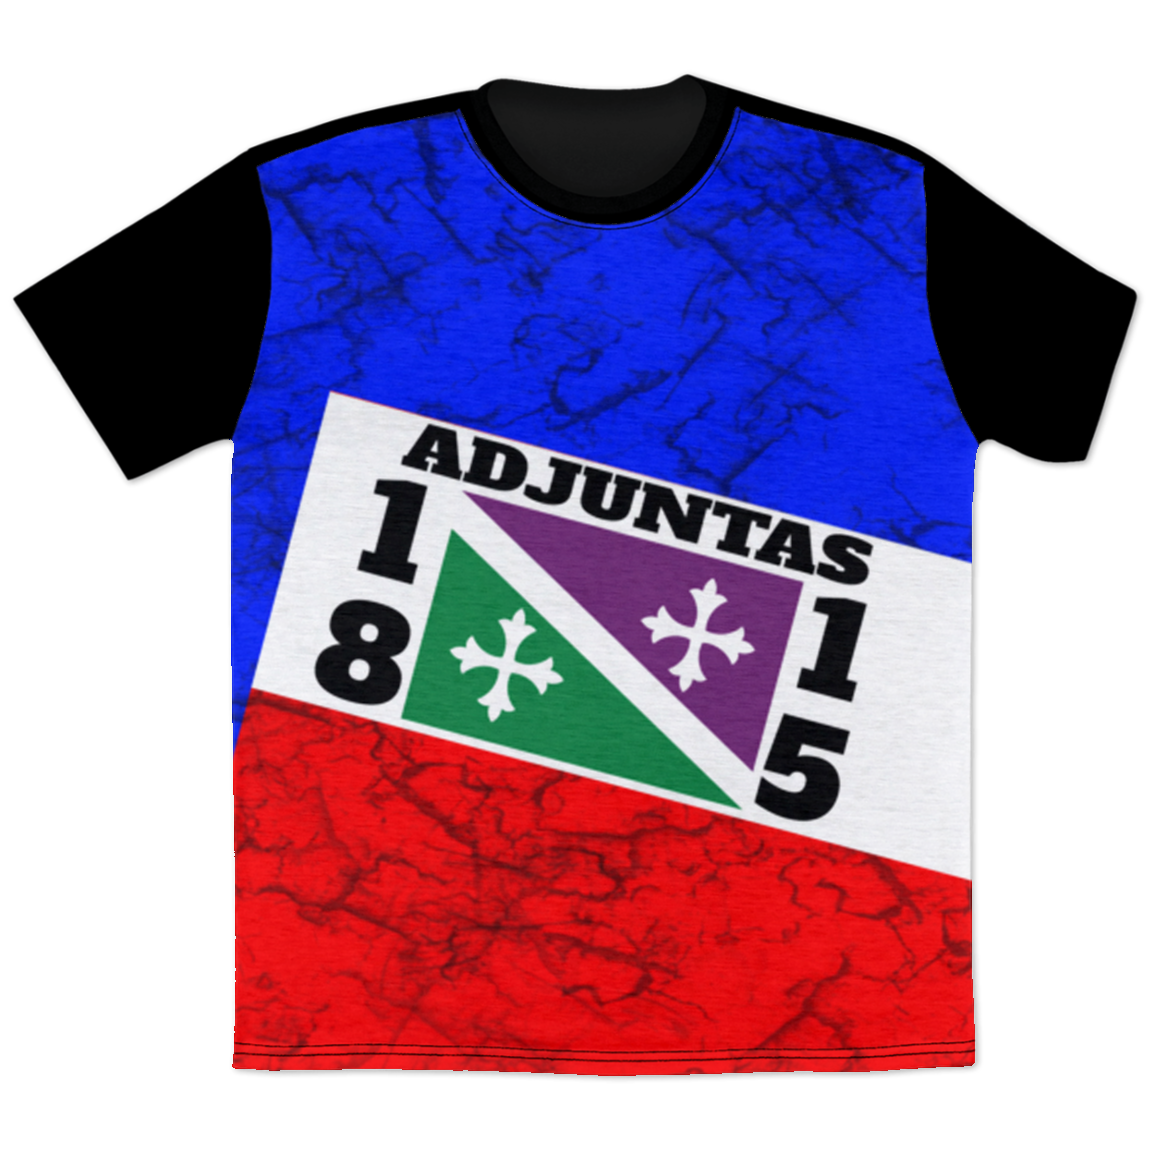 Adjuntas T-Shirt - Puerto Rican Pride